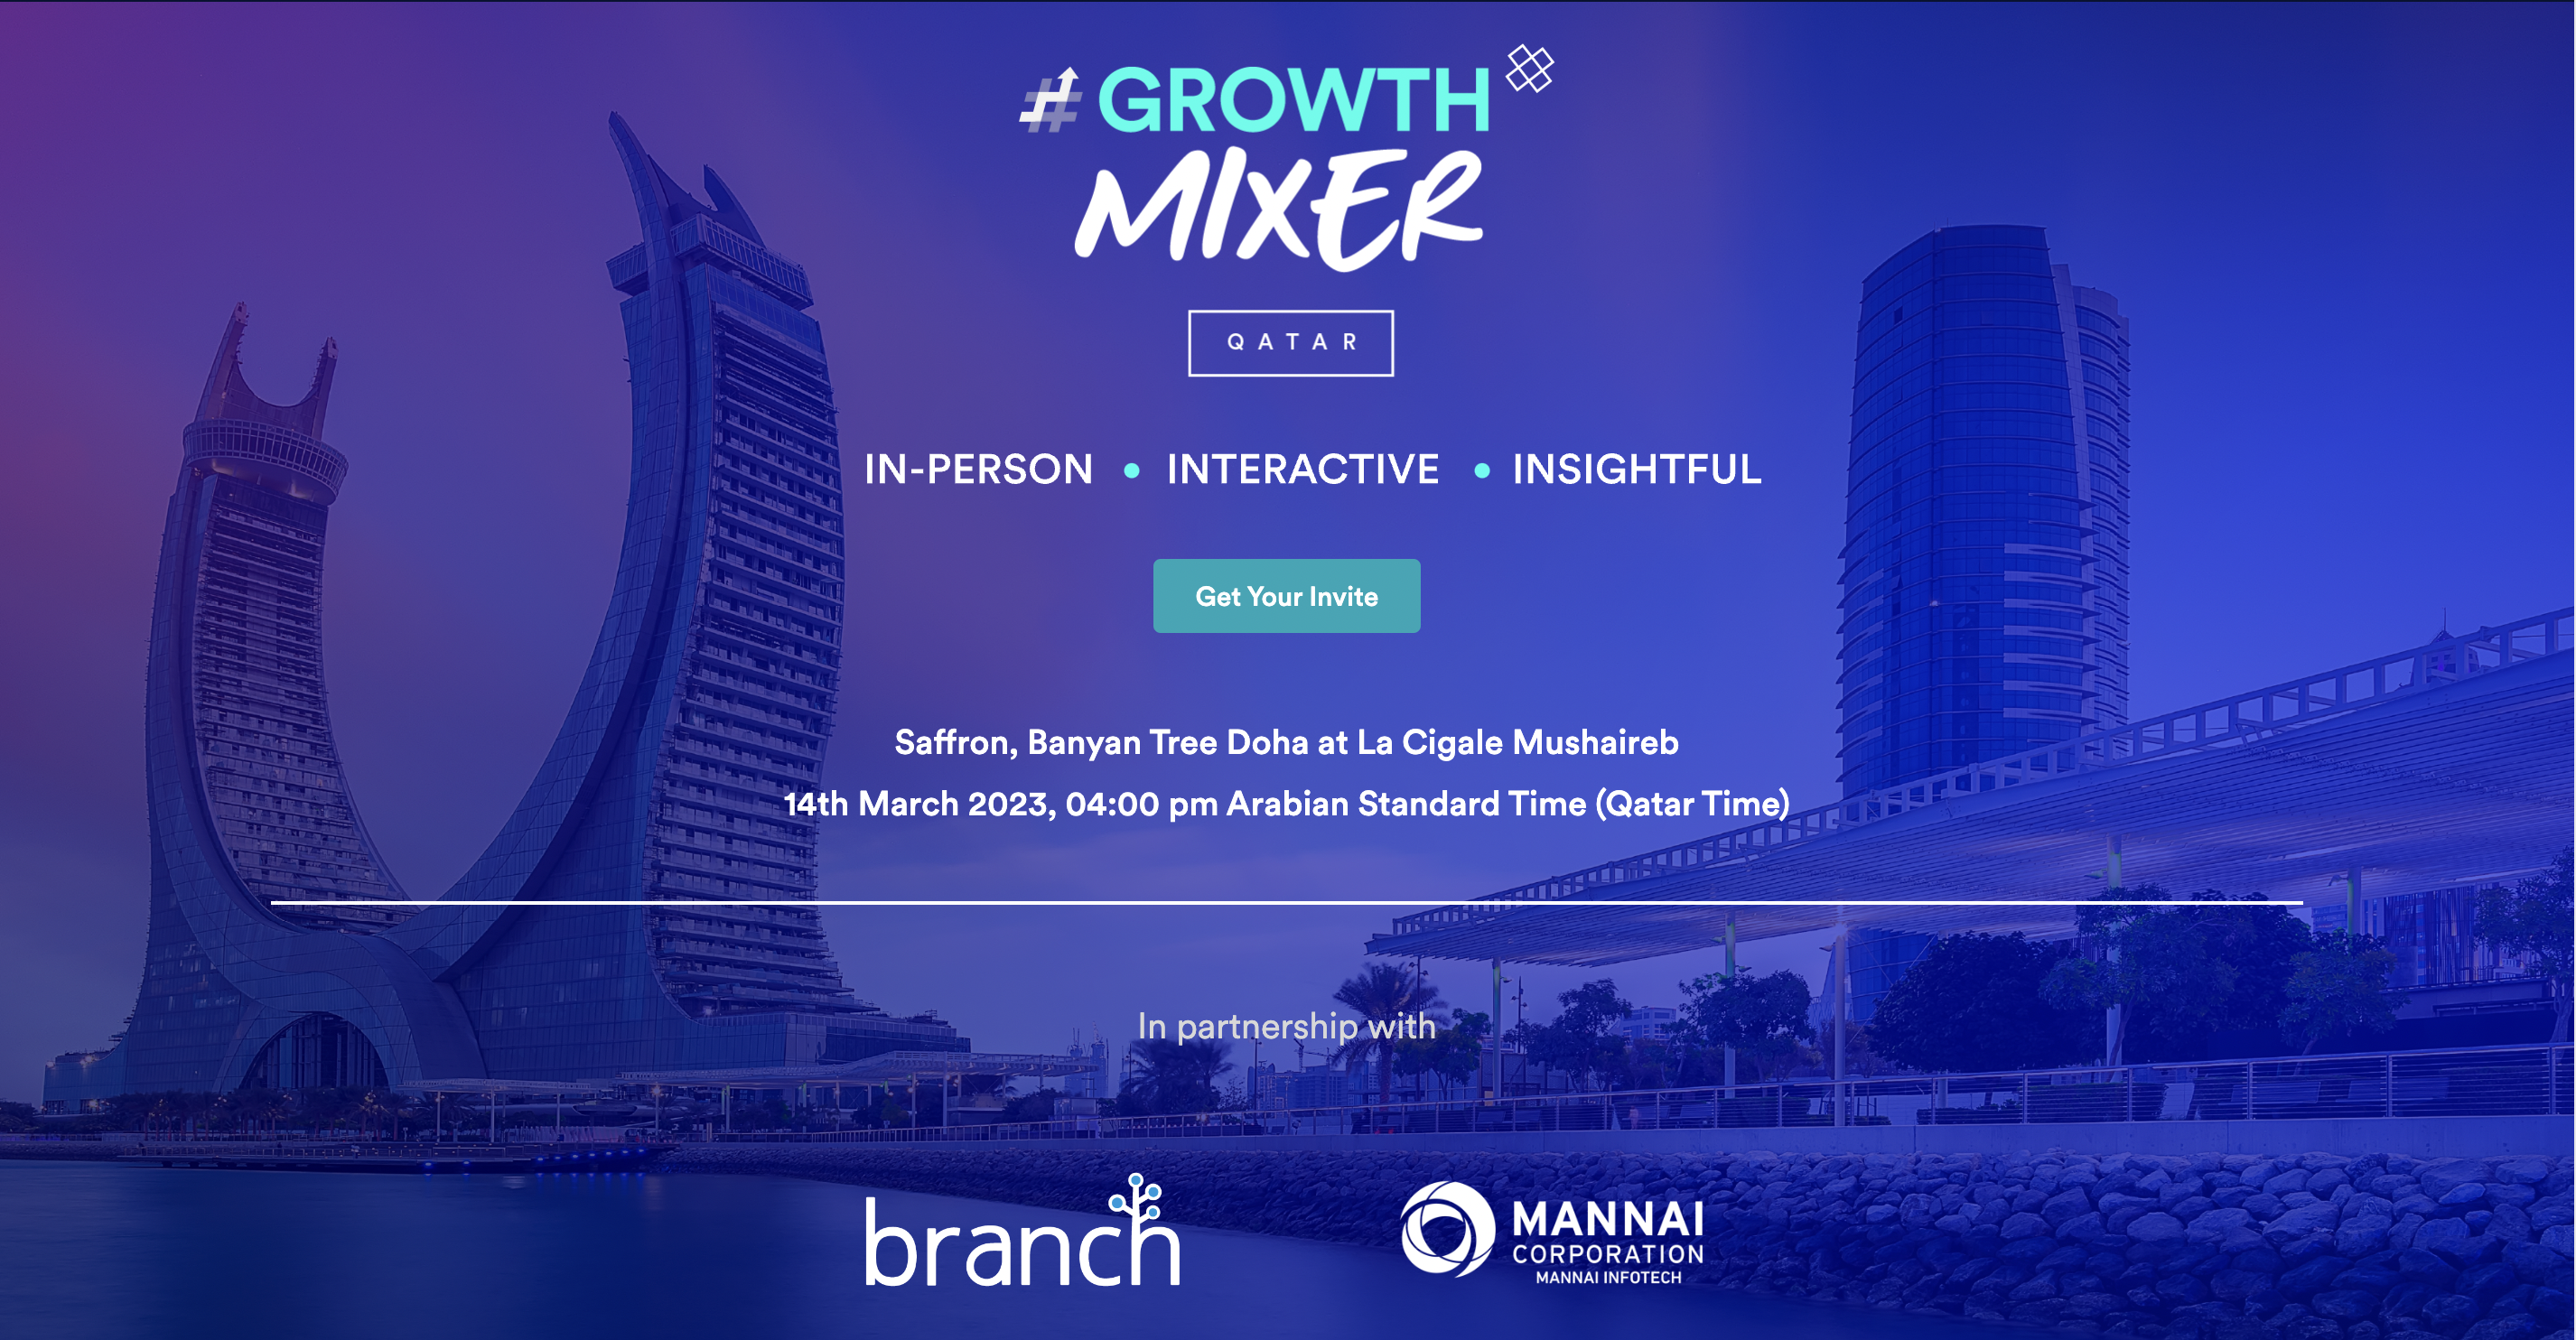 #GROWTH Mixer Qatar